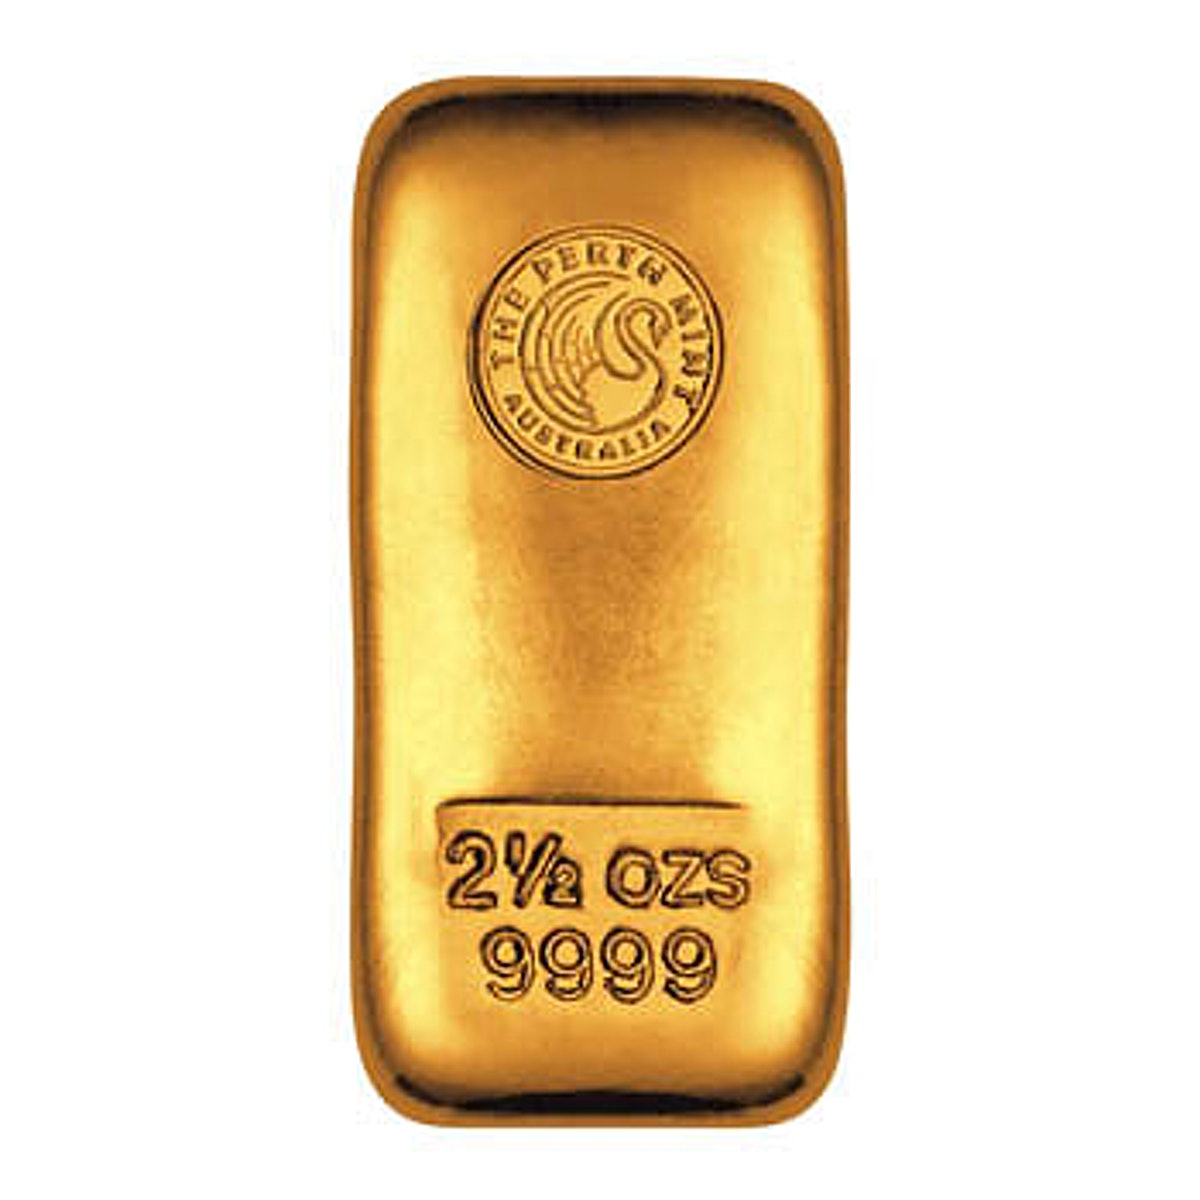 Perth Mint Gold Cast Bar 2.5 oz Australian gold refinery